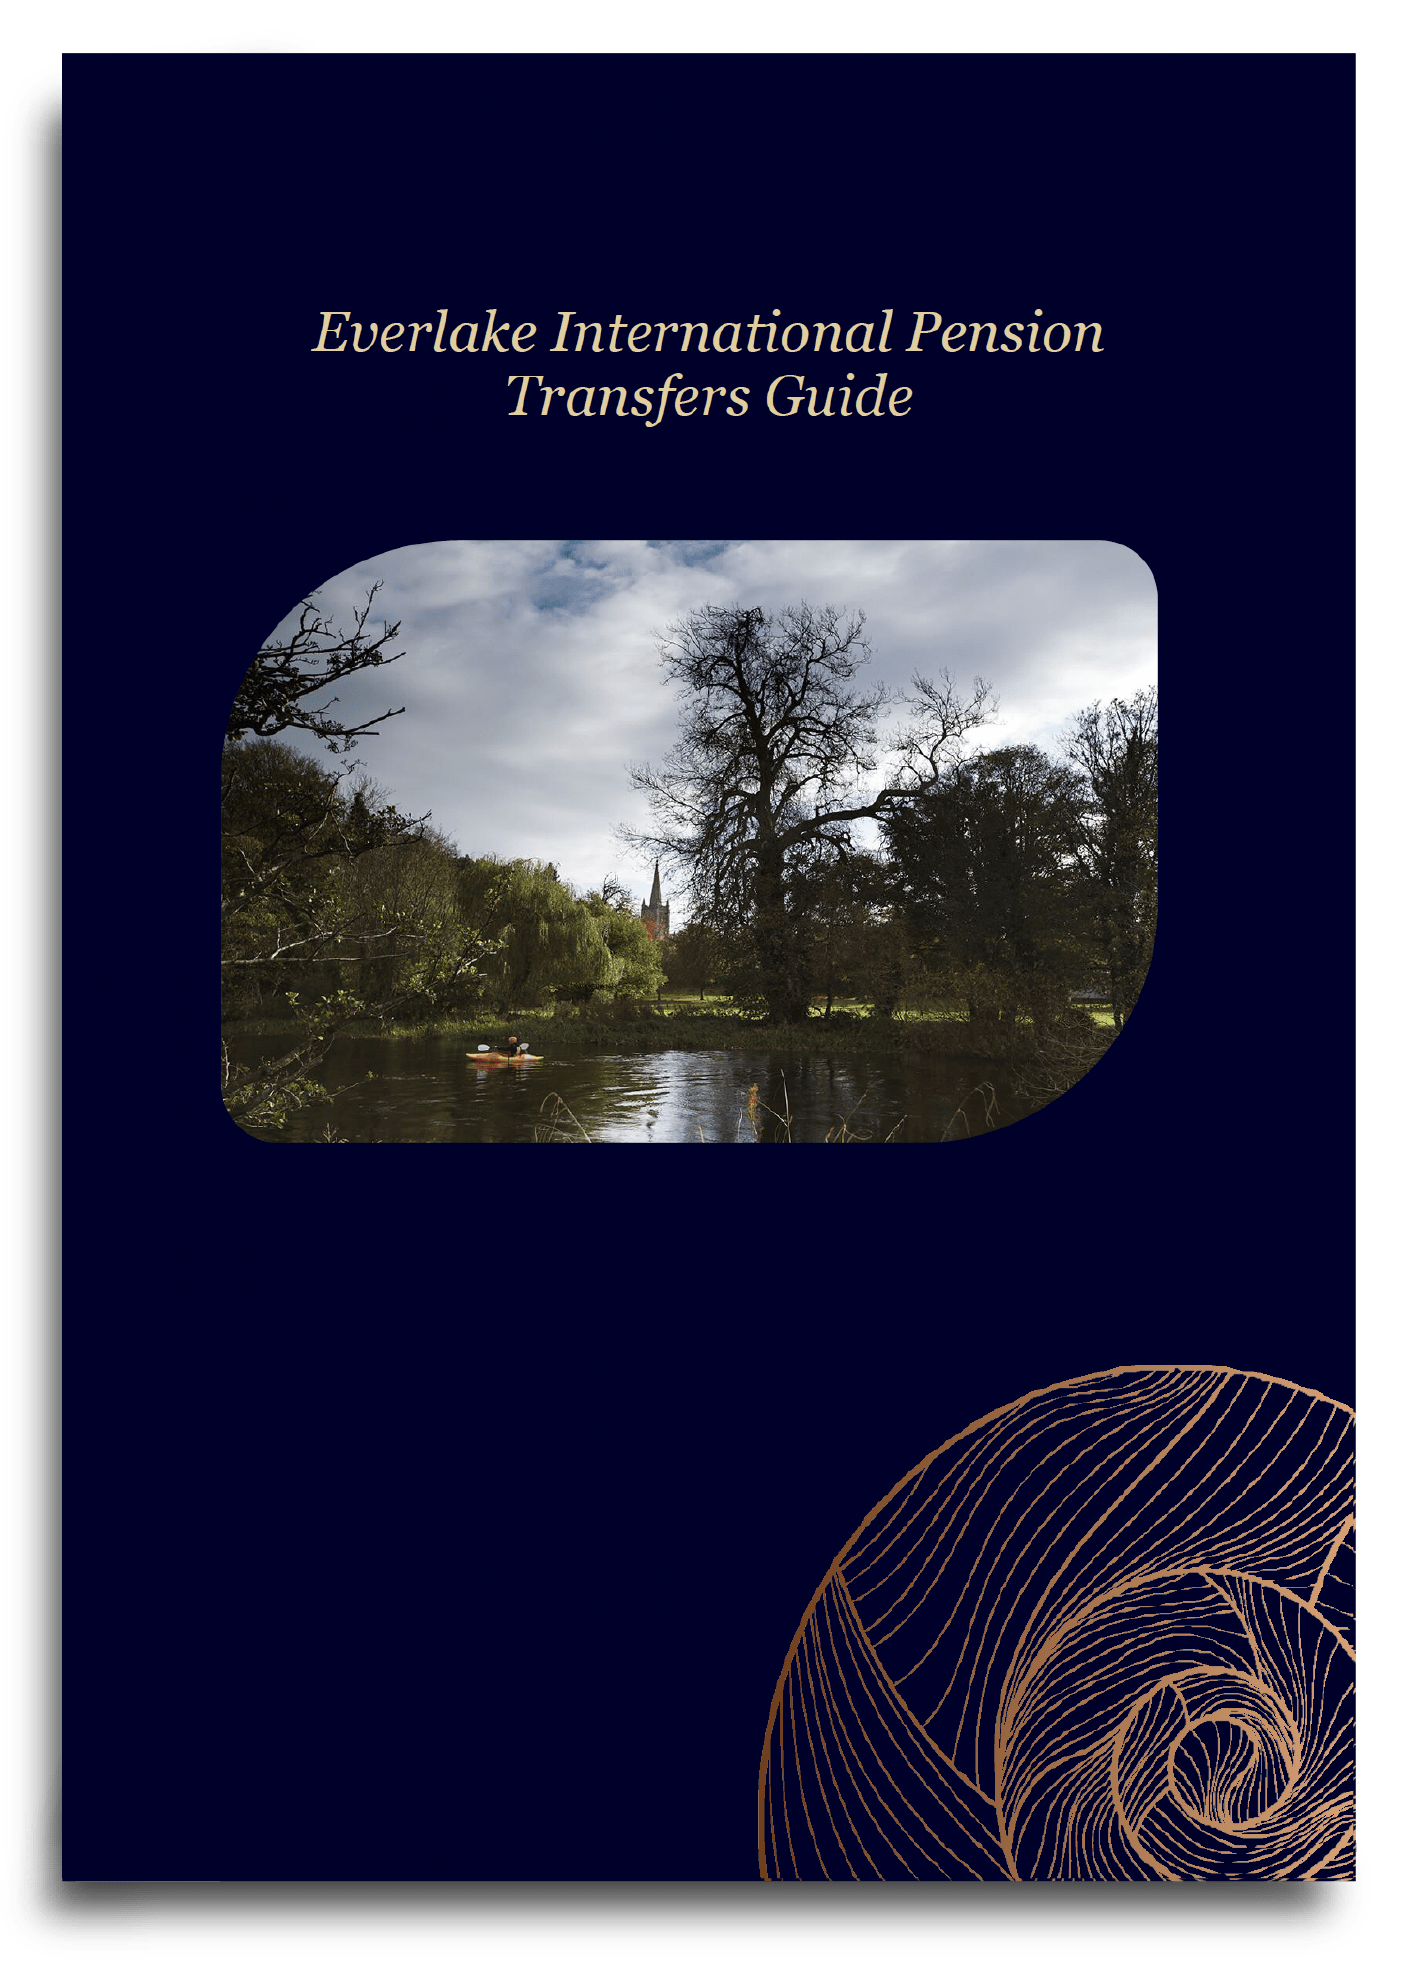 Guide Cover: Everlake International Pension Transfers Guide